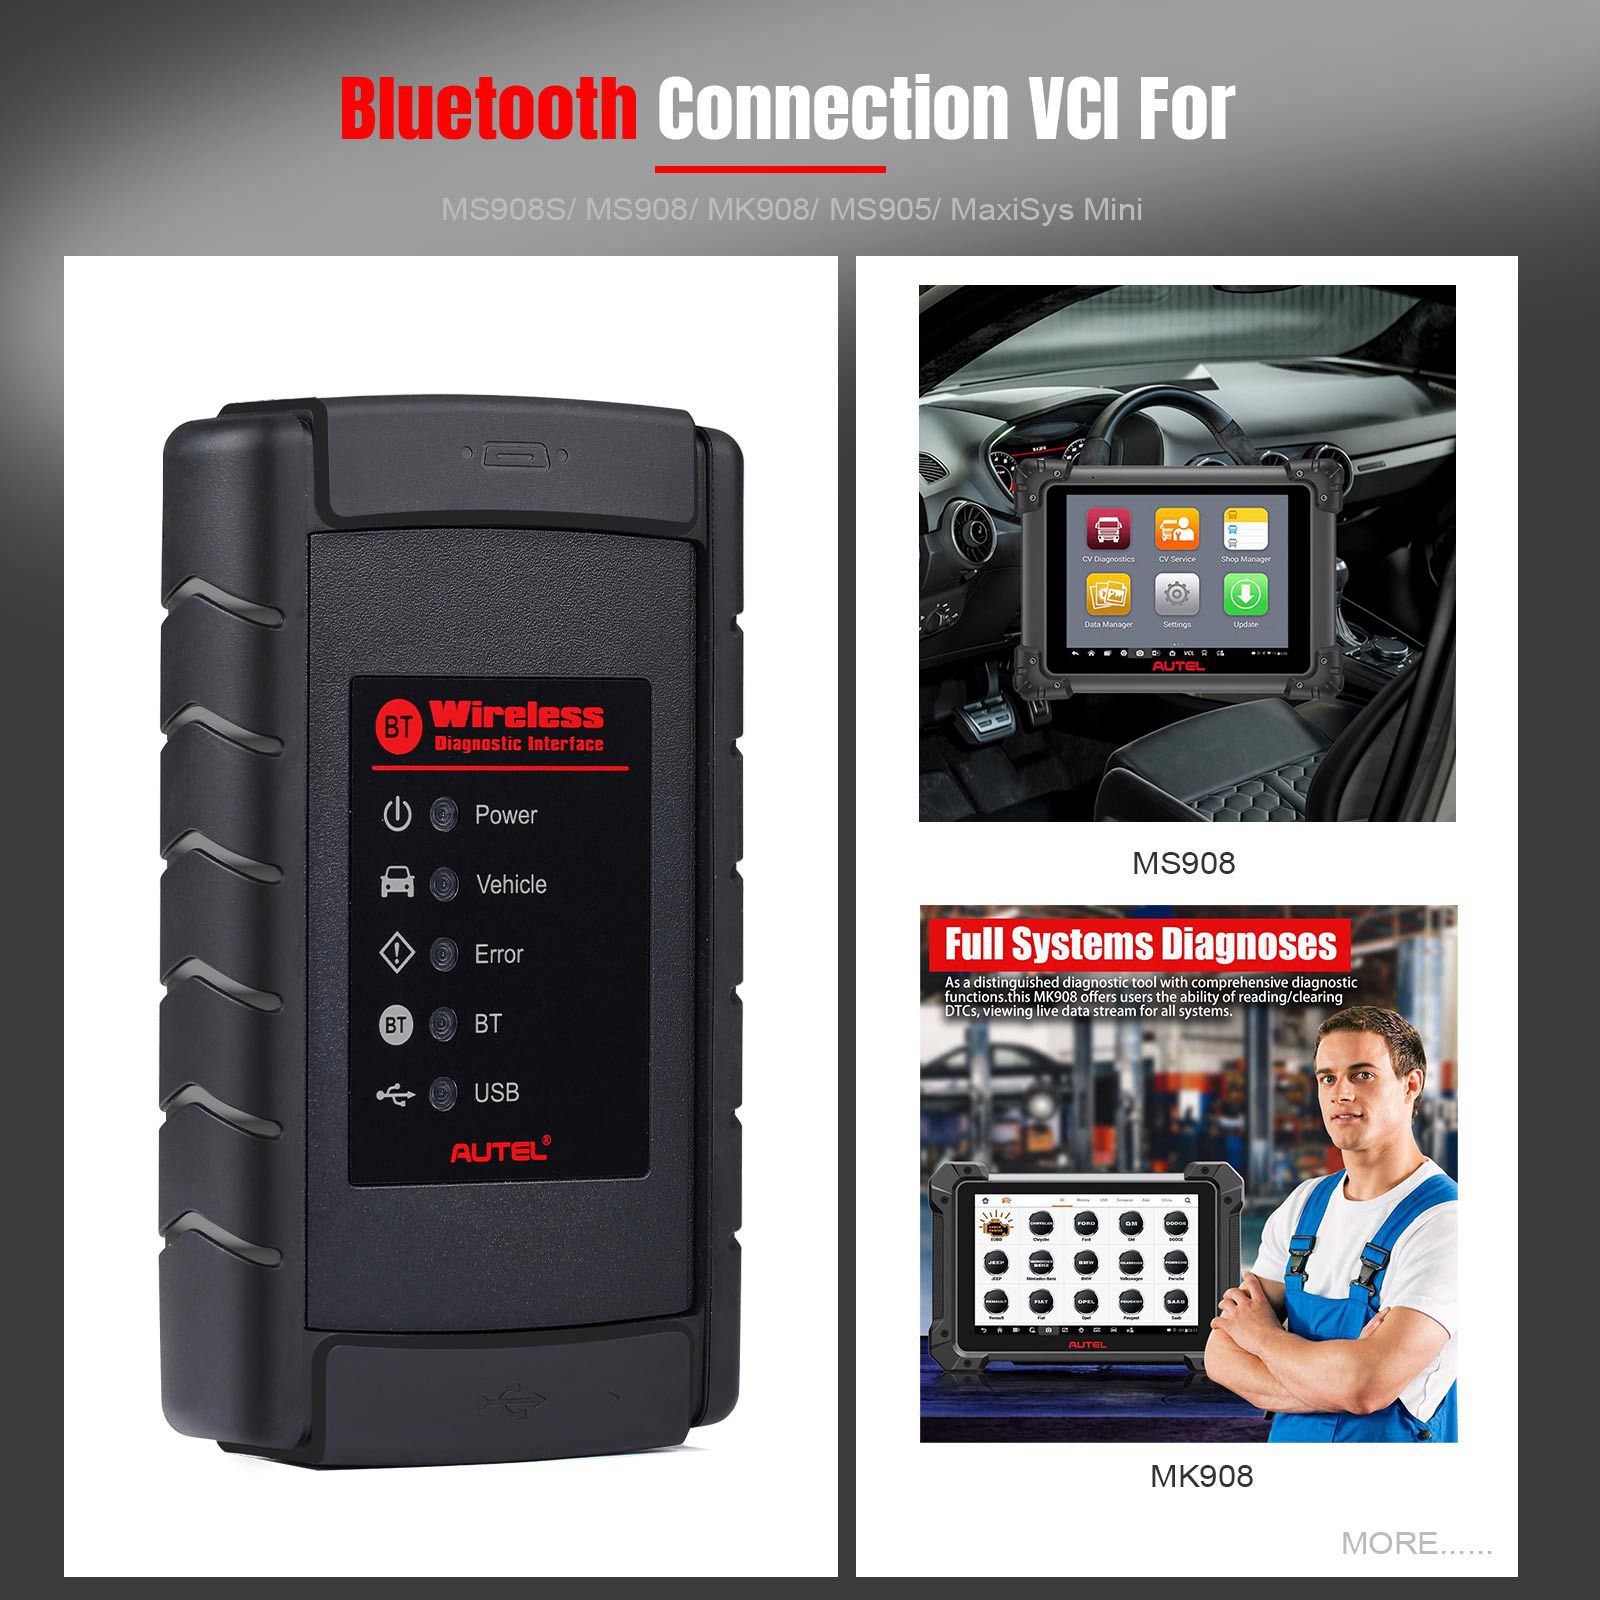 Original Autel VCI Bluetooth Adapter Drahtlose Diagnose Schnittstelle Bluetooth Verbindung VCI Für MS908S/MS908/MK908/MS905/MaxiSys Mini